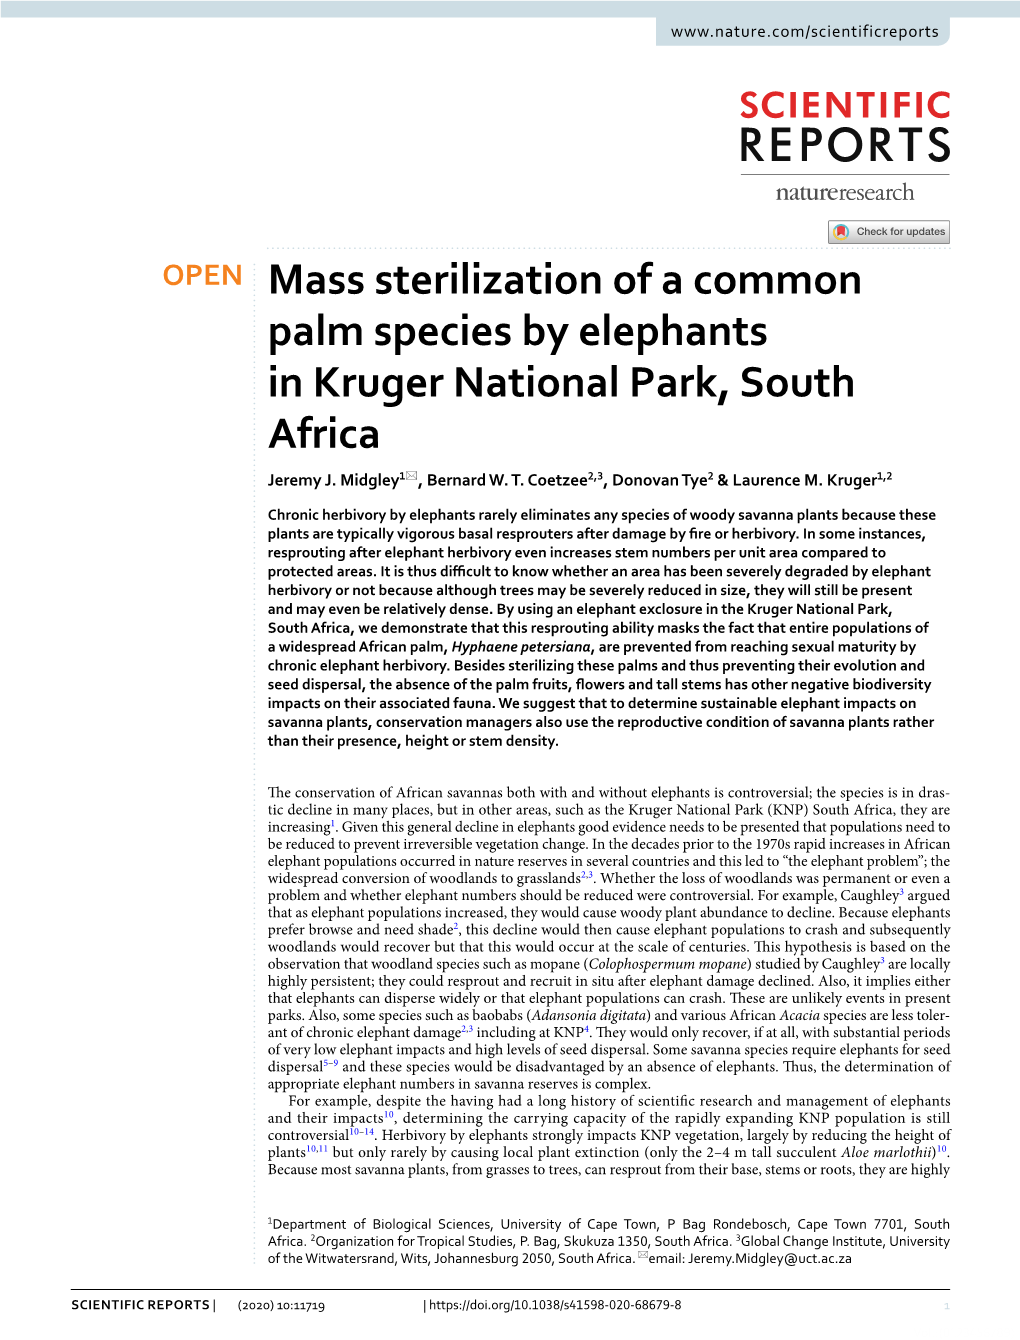 Mass Sterilization of a Common Palm Species by Elephants in Kruger National Park, South Africa Jeremy J